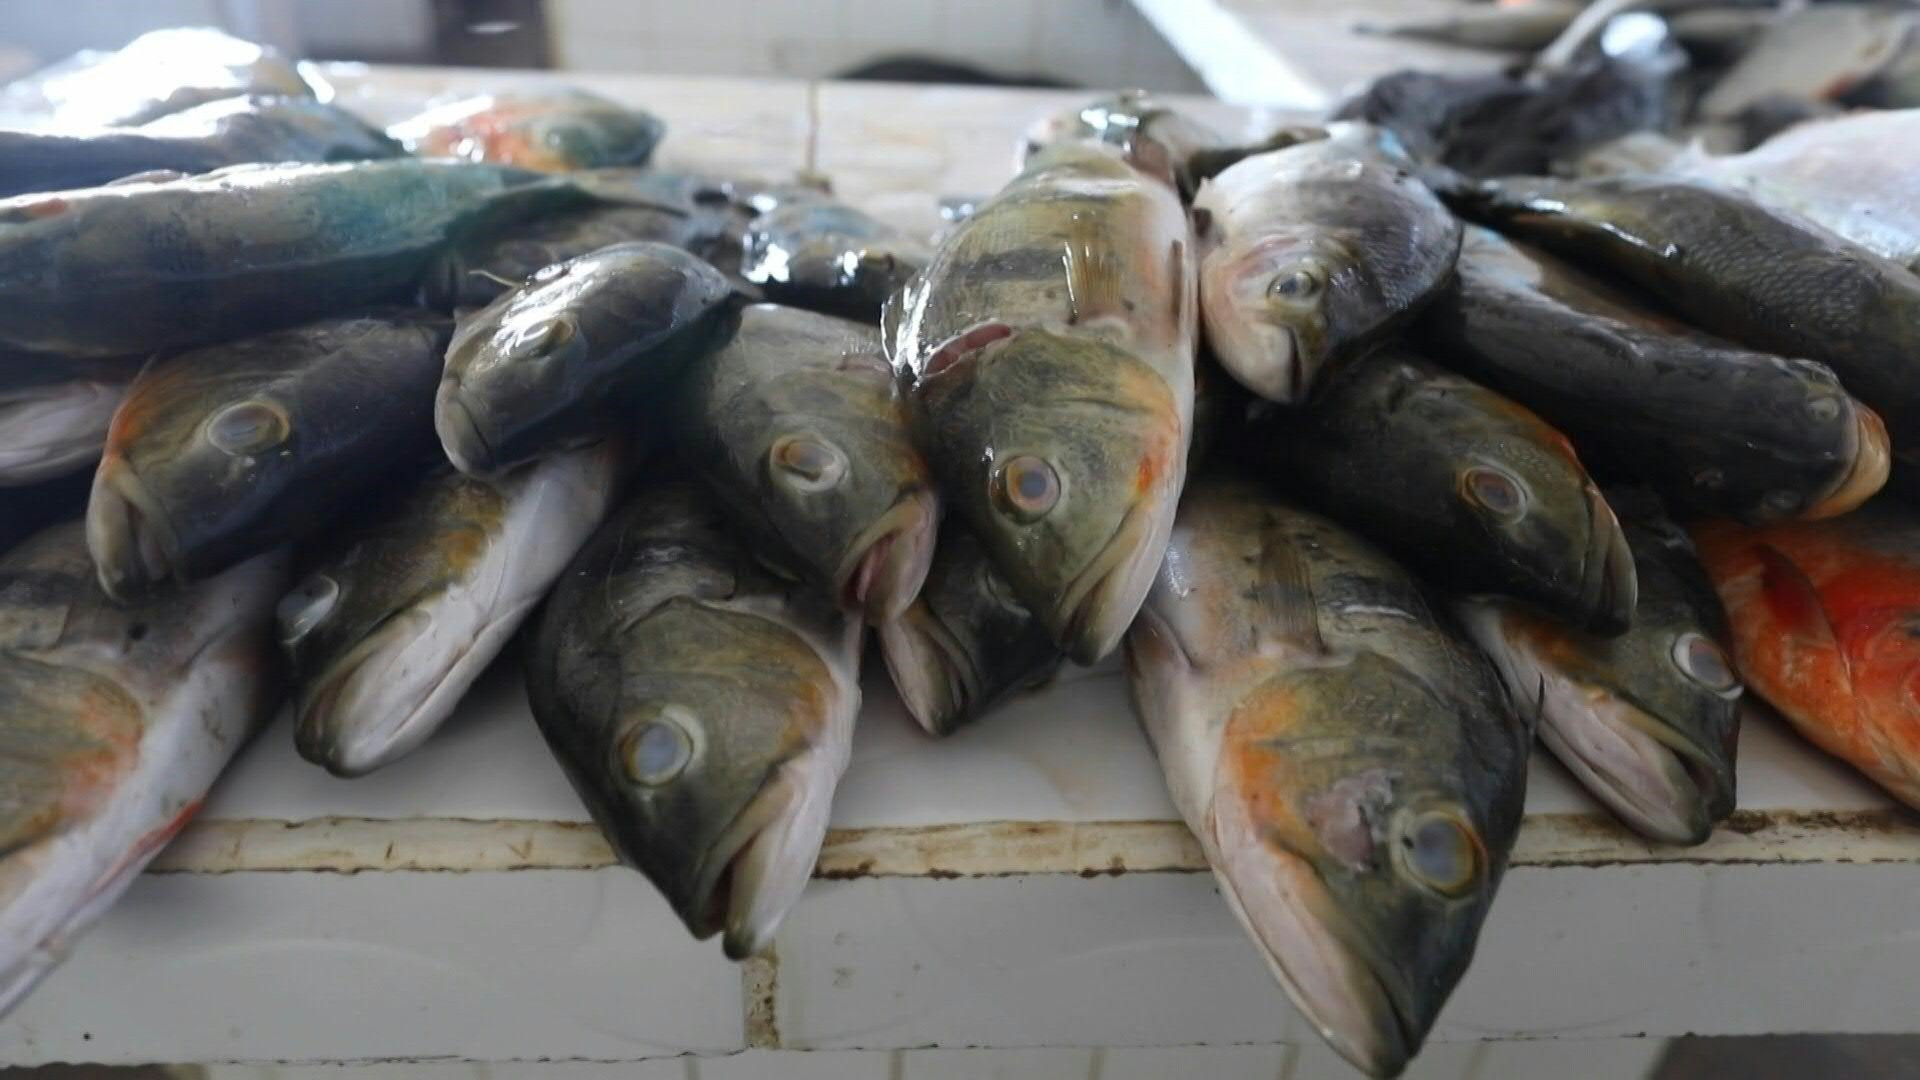 Las aguas turbias de la pesca ilegal salpican el doble asesinato en la Amazonía brasileña